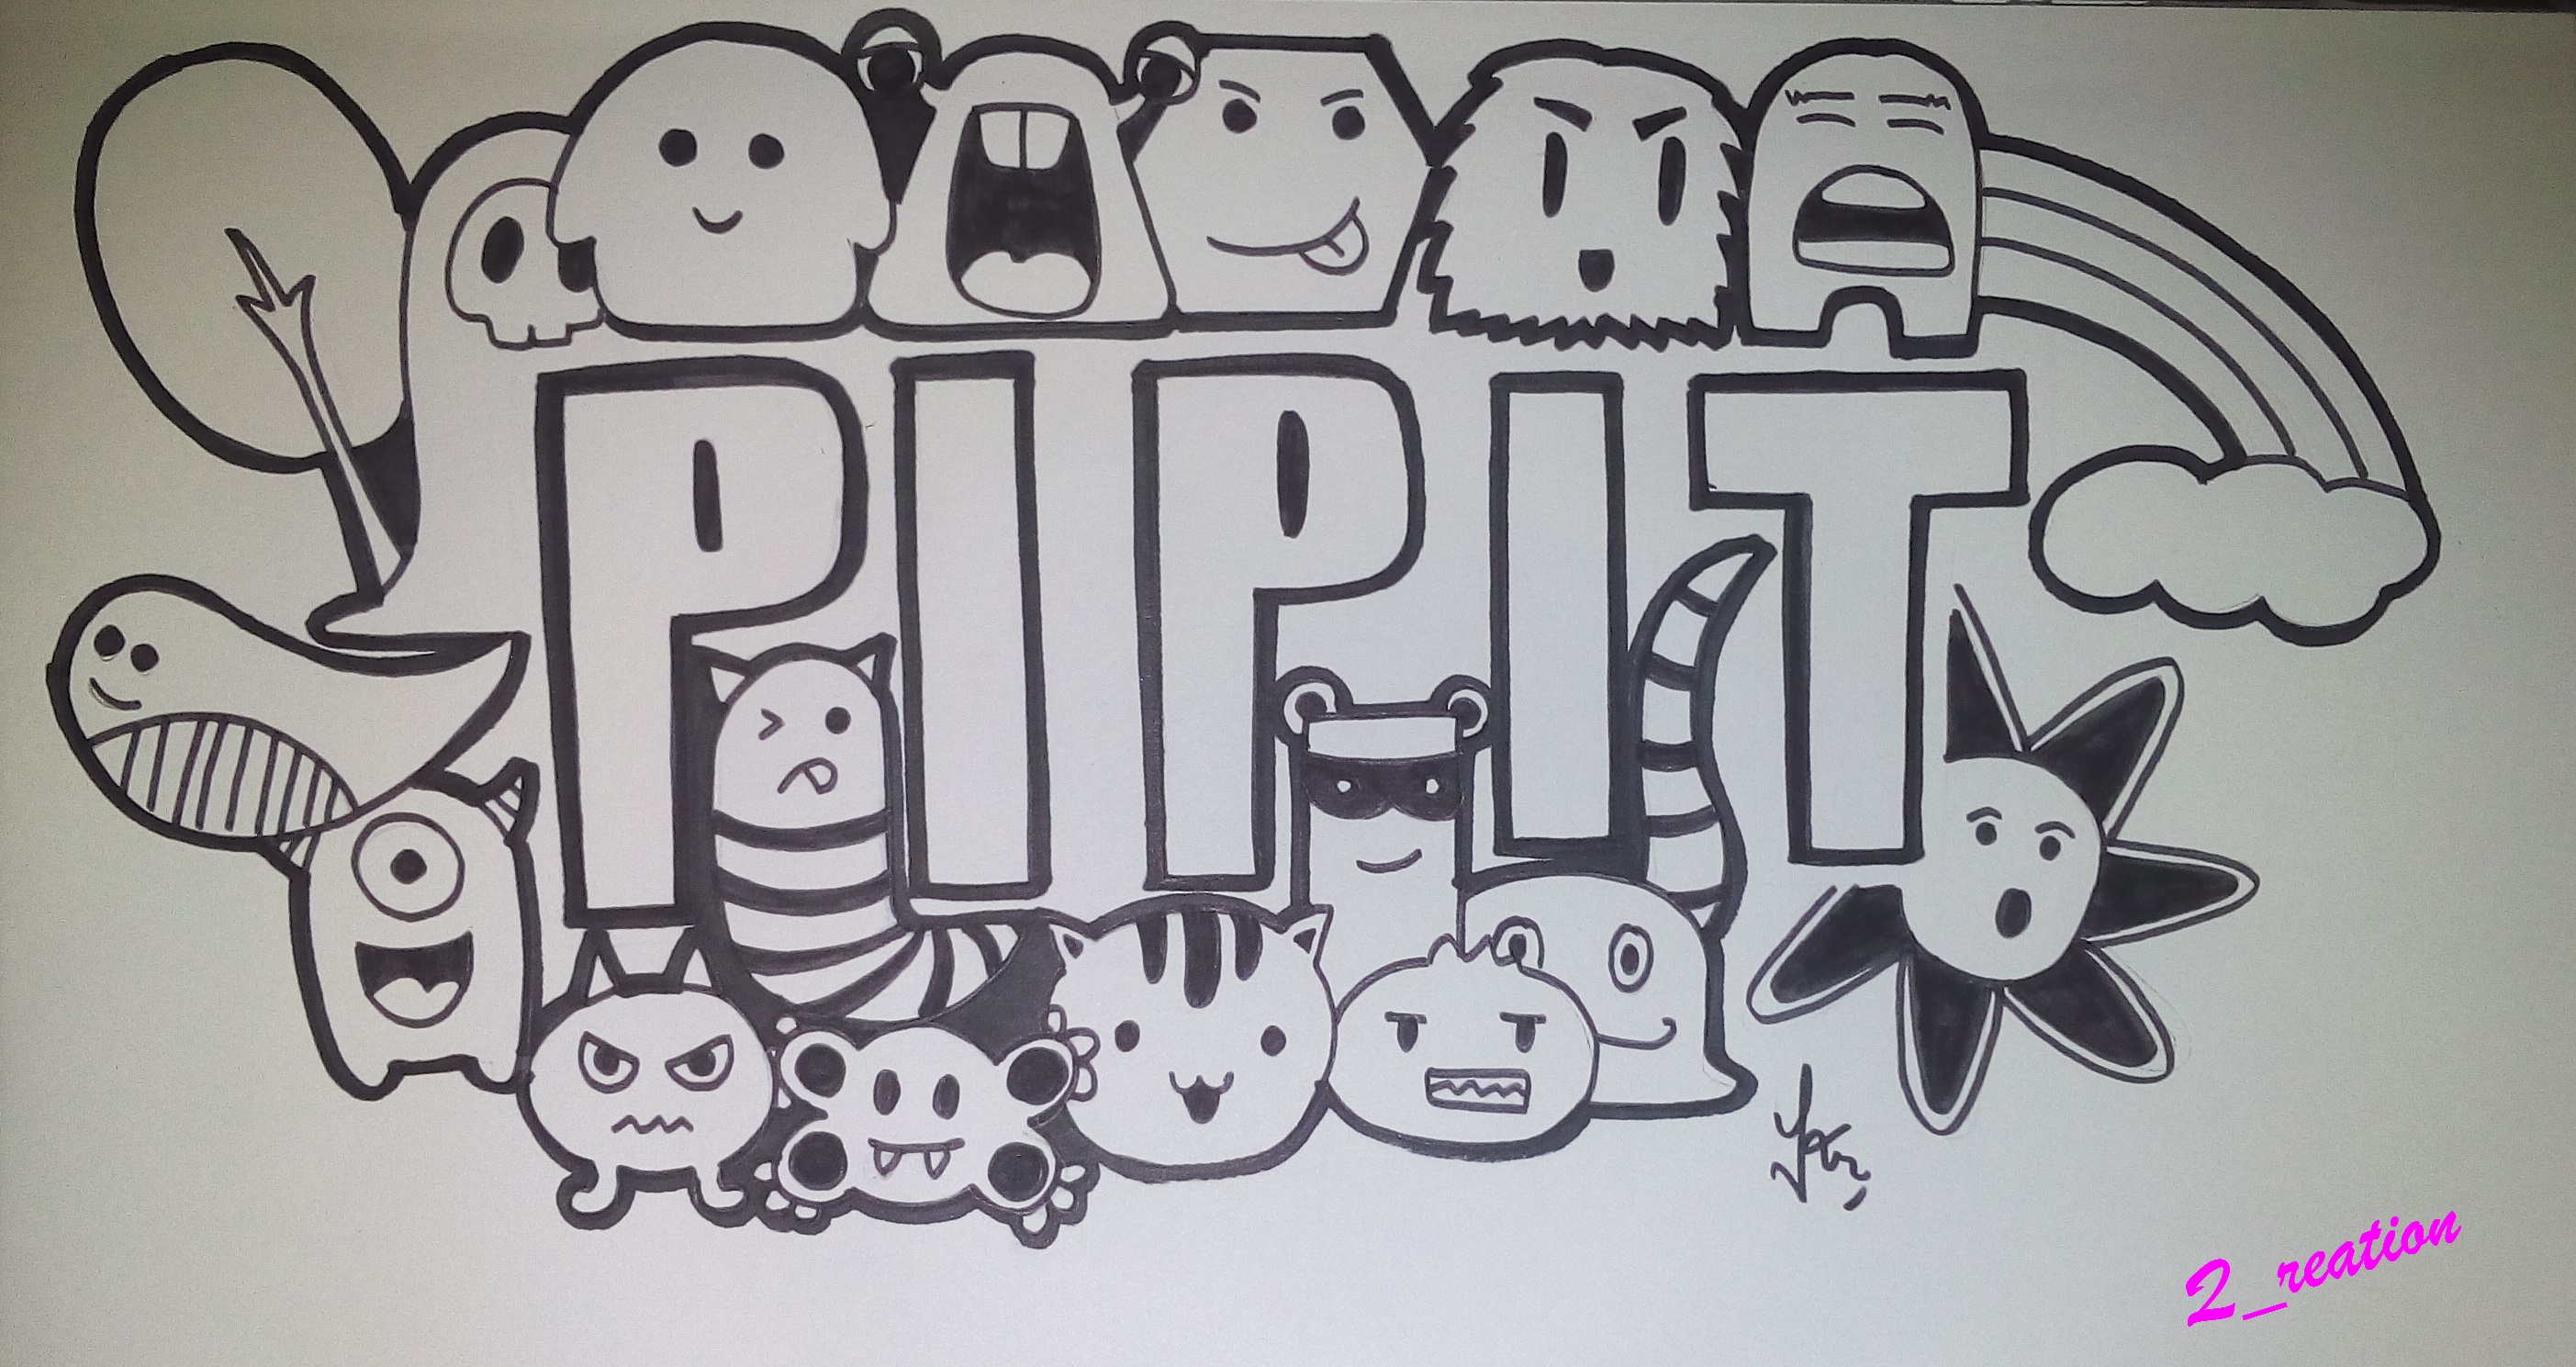 Doodle Project Pipit Kikyrose